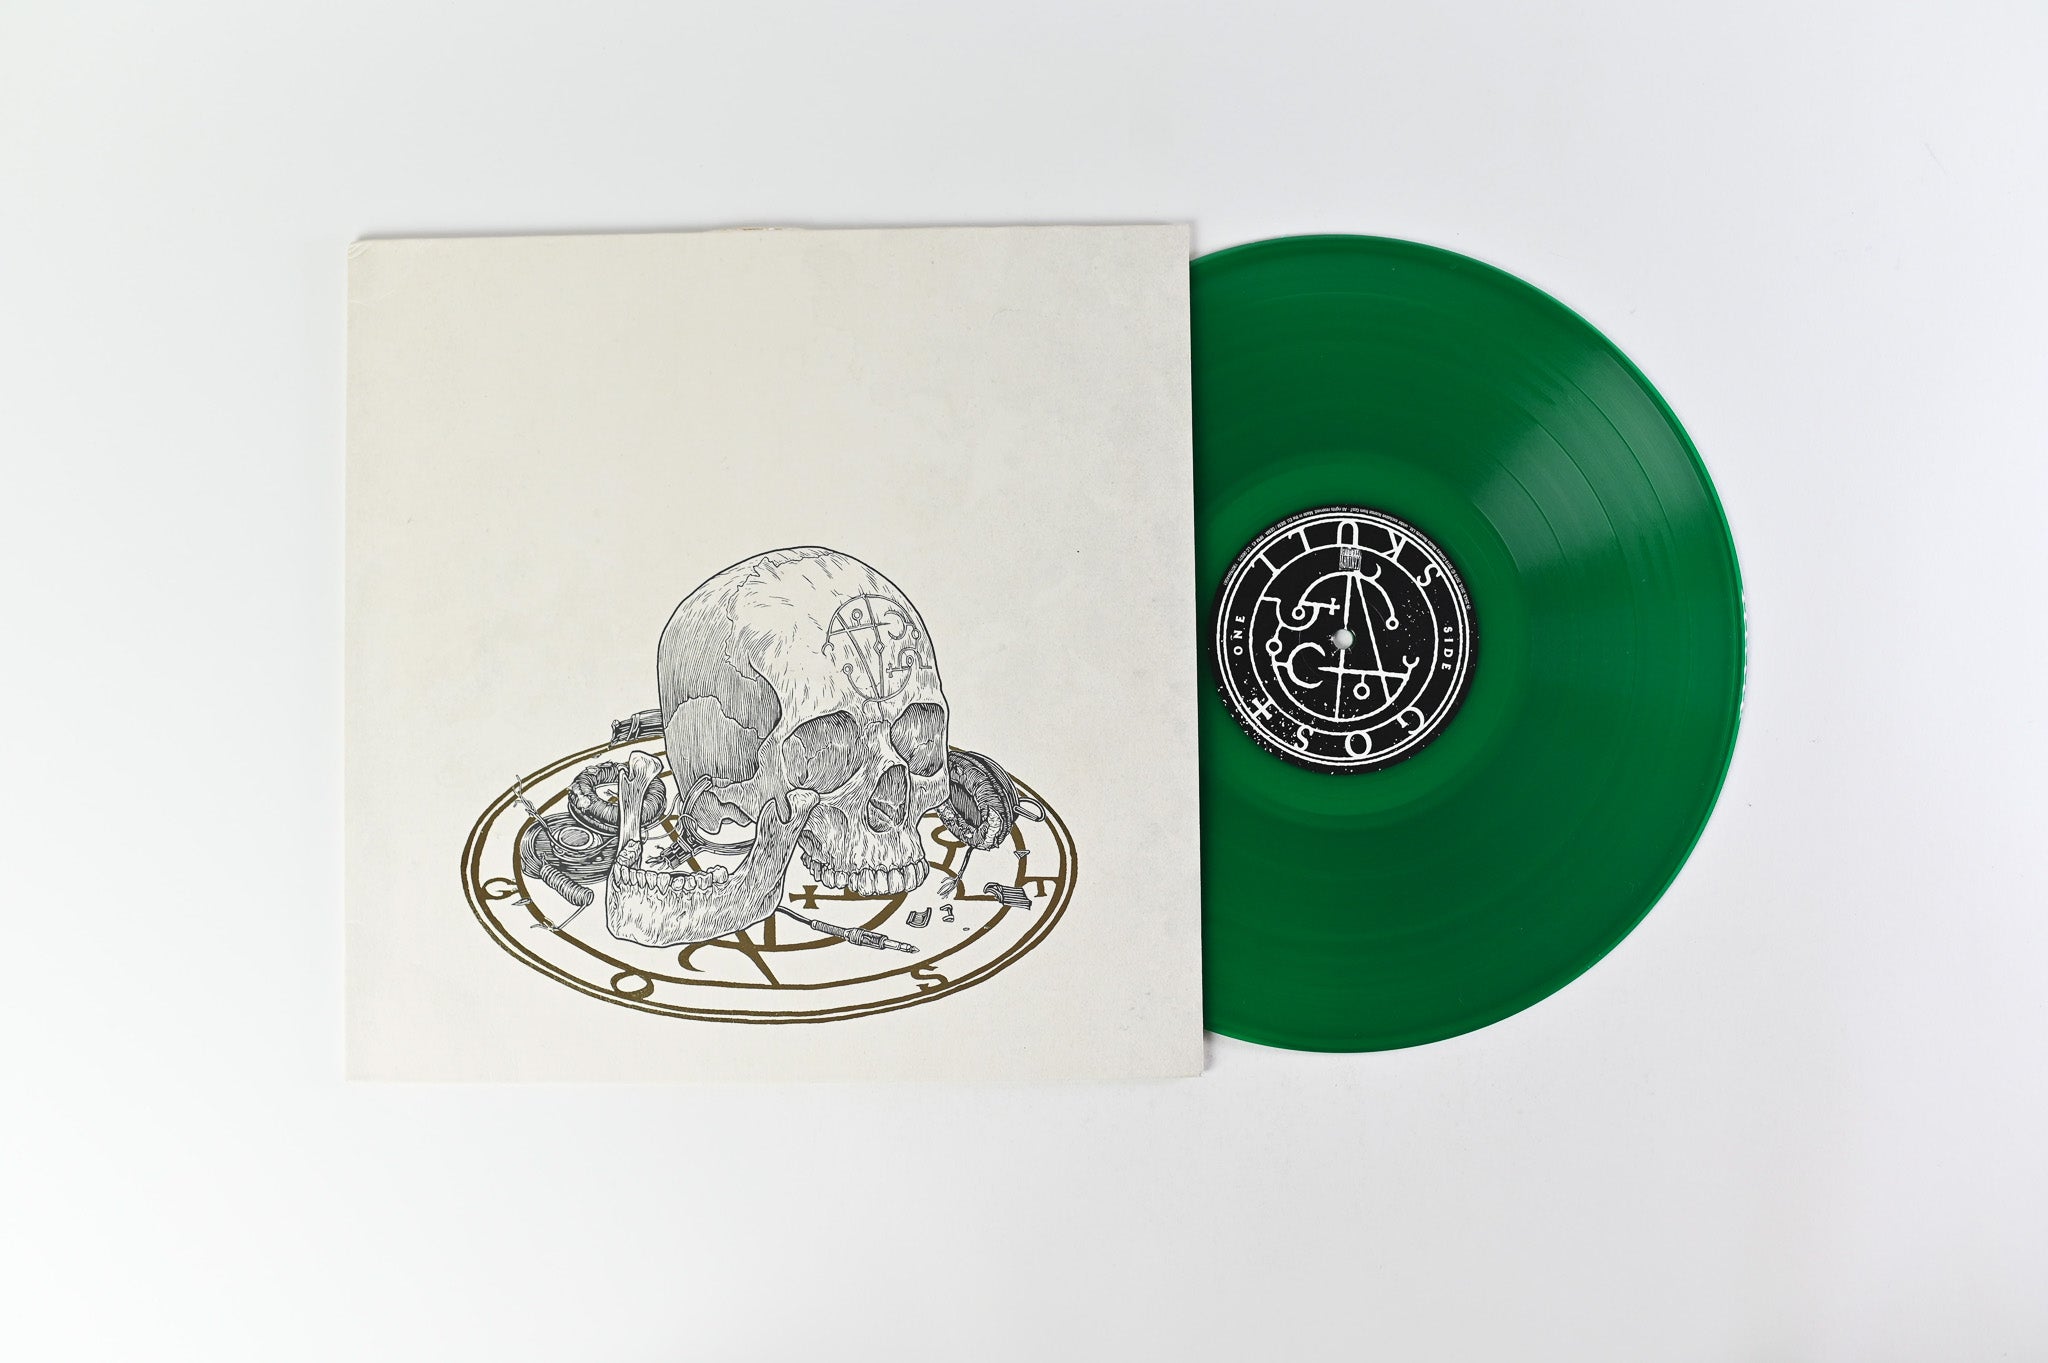 Gost - Skull on Century Media 45 RPM Ltd Green Vinyl